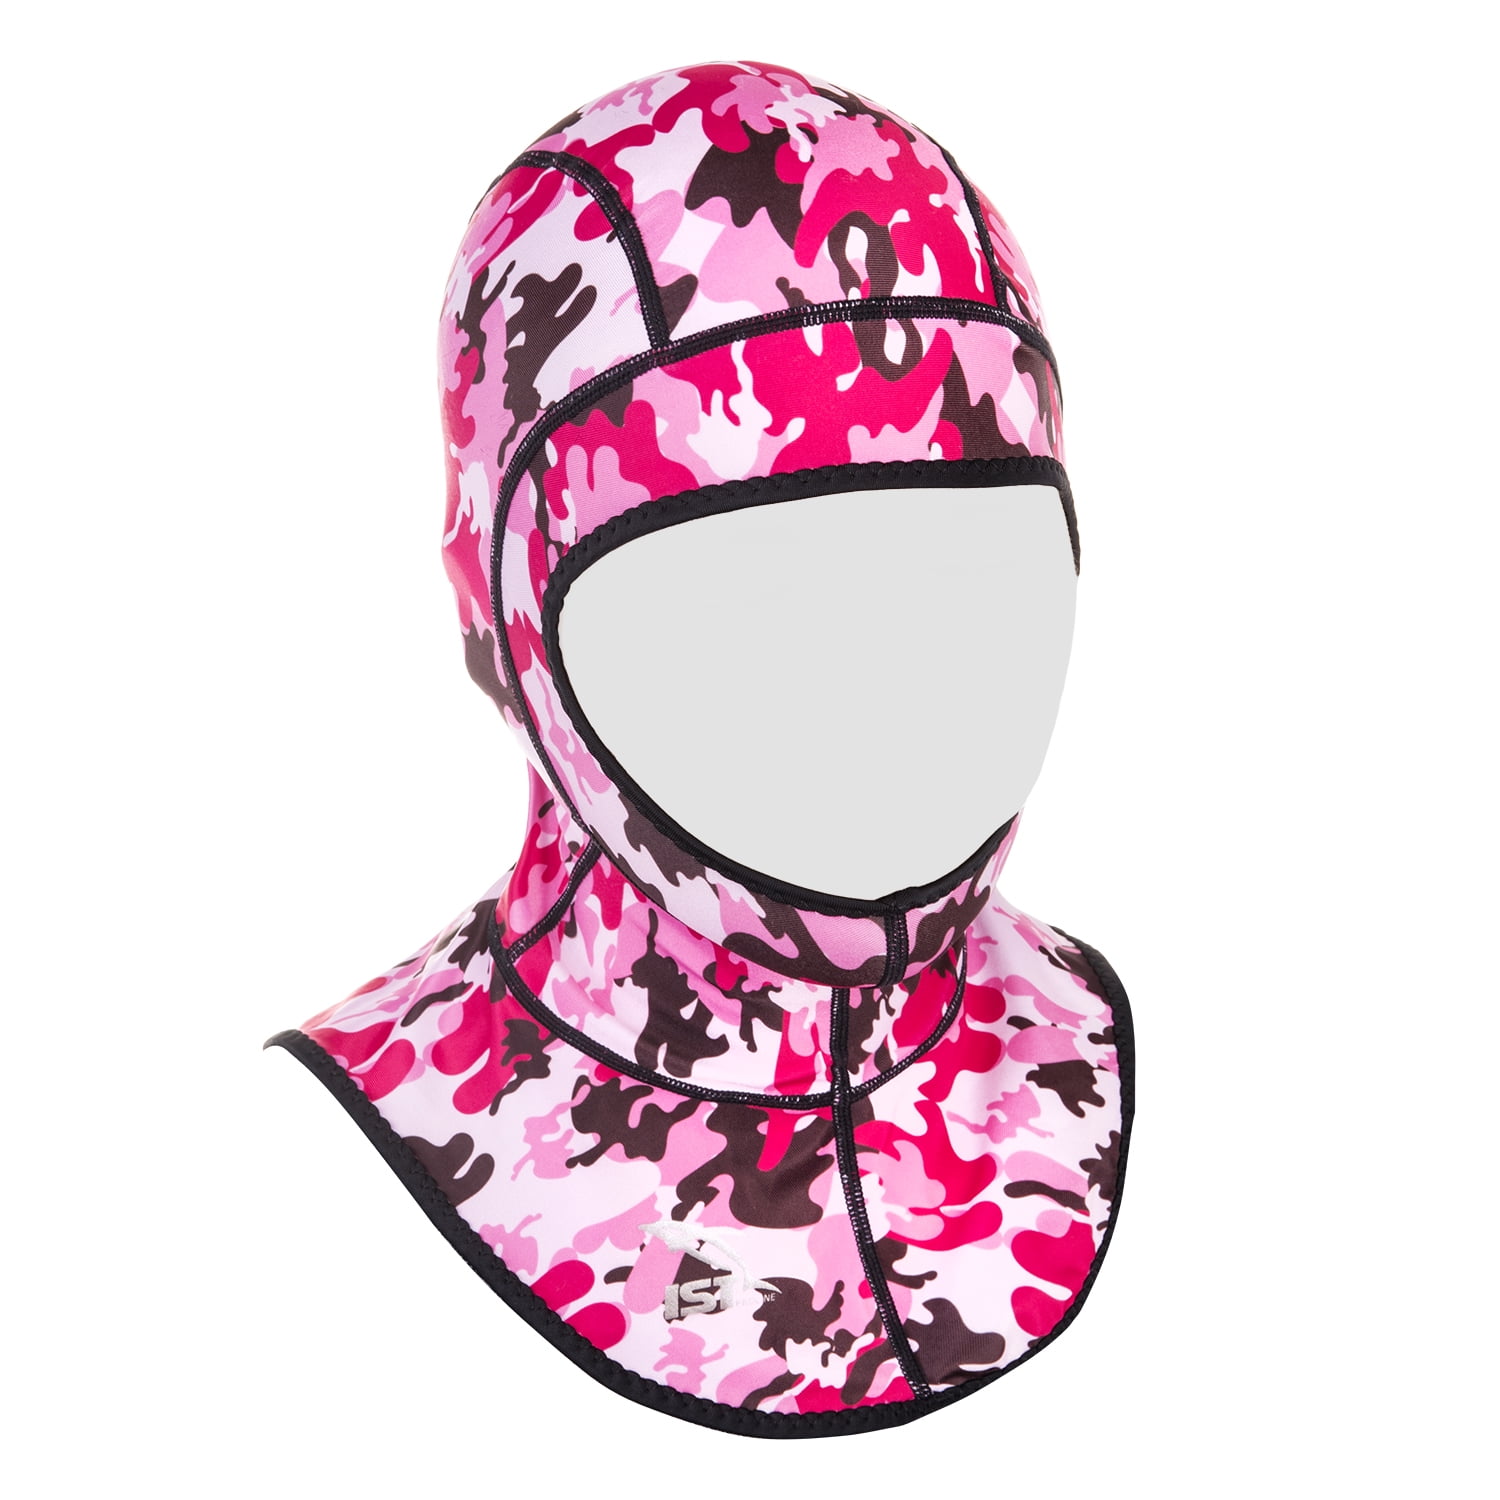 5mm Diving Hood Diving Full Face Mask Wetsuit Hood Cap Head Cover 